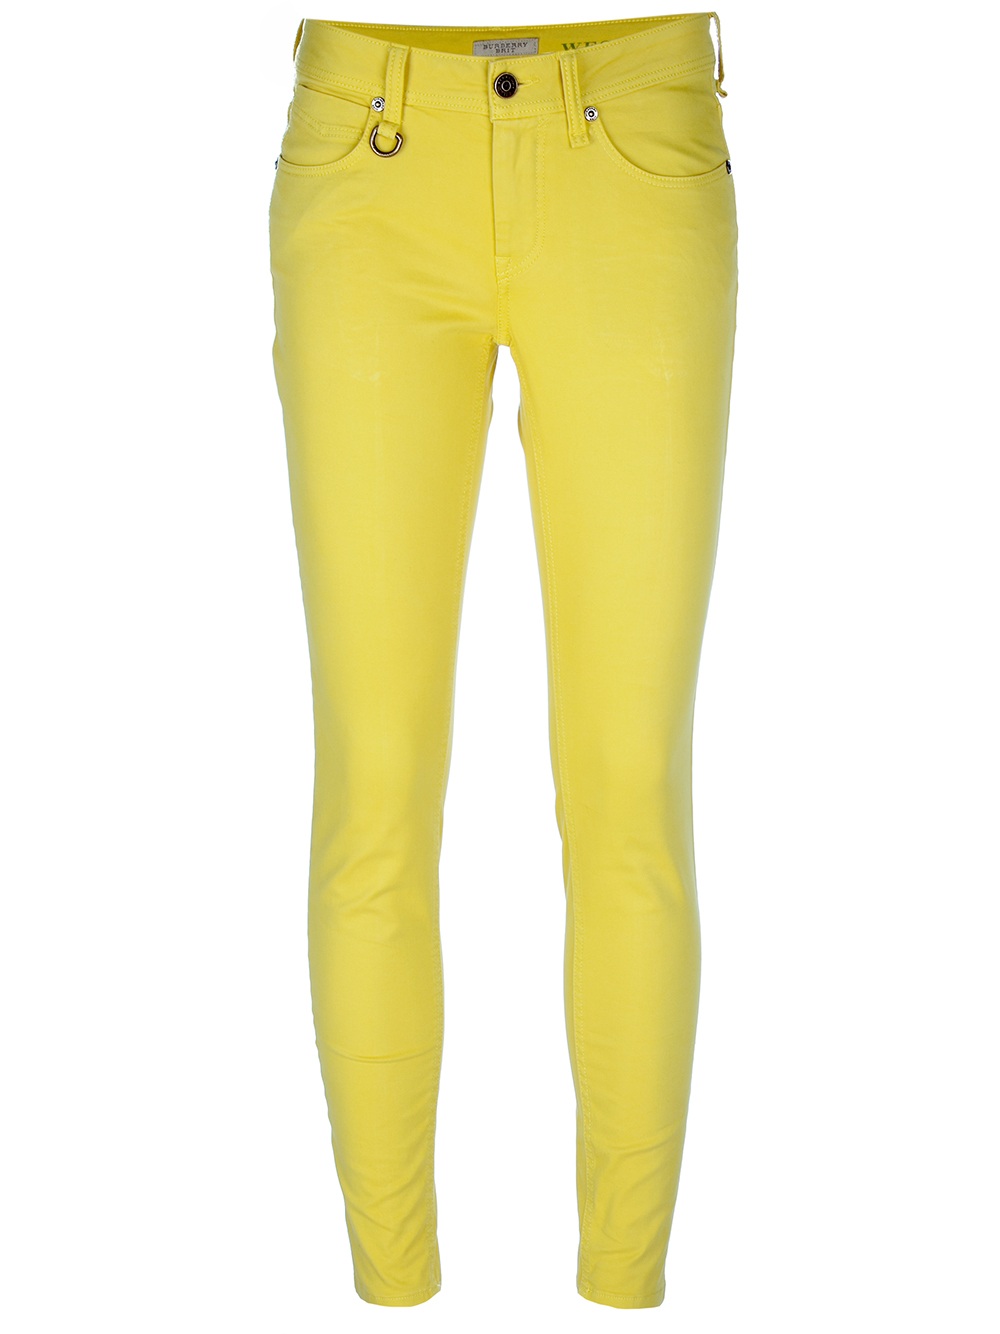 Lyst - Burberry Westbourne Skinny Leg Jean in Yellow